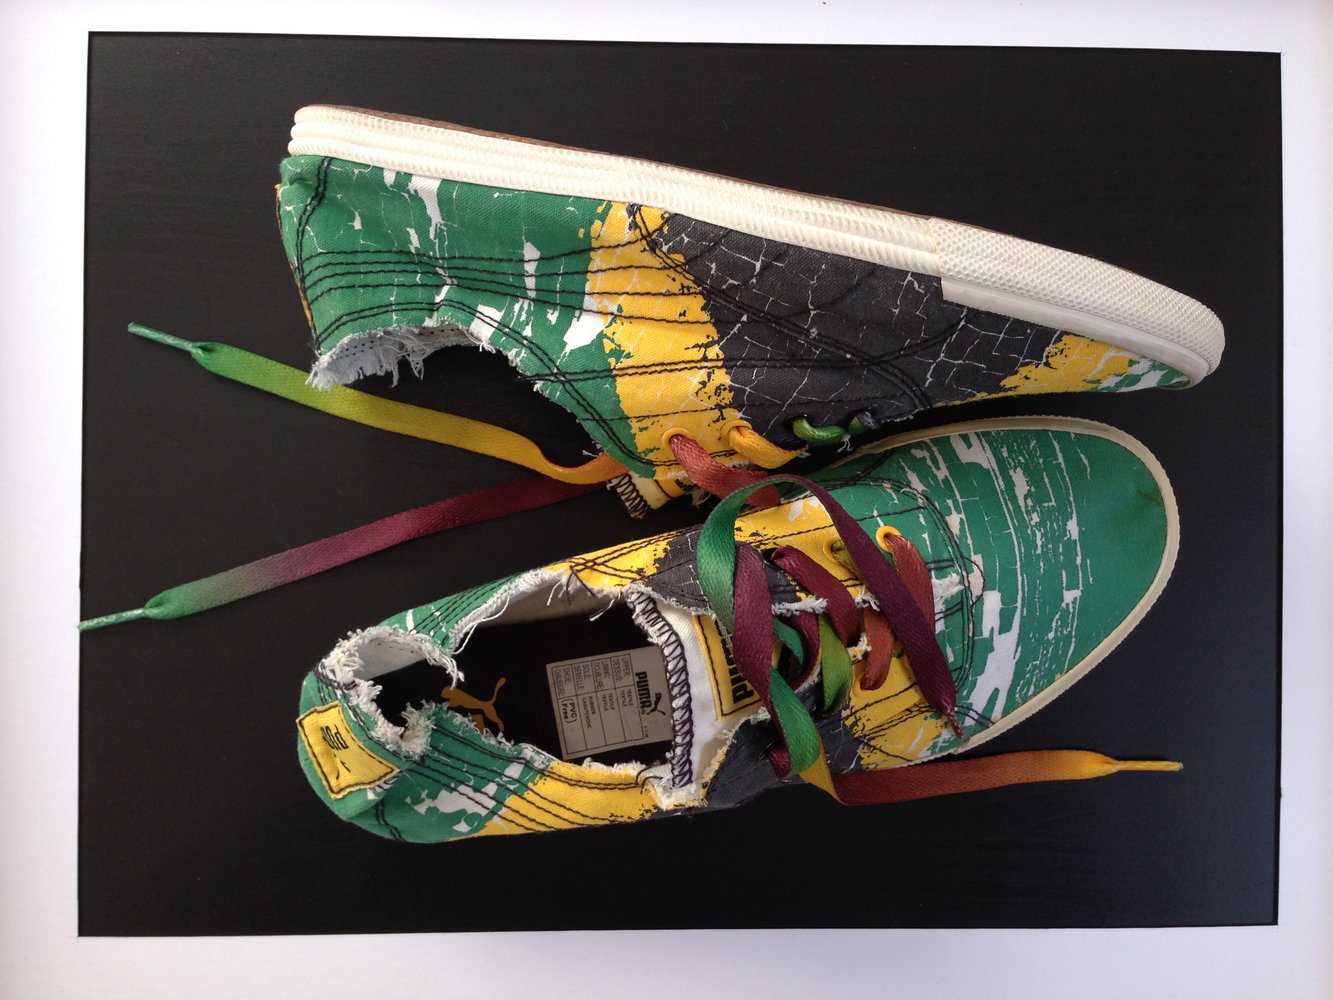 puma fashion summer edition shoe sneaker jamaika style colour size 41